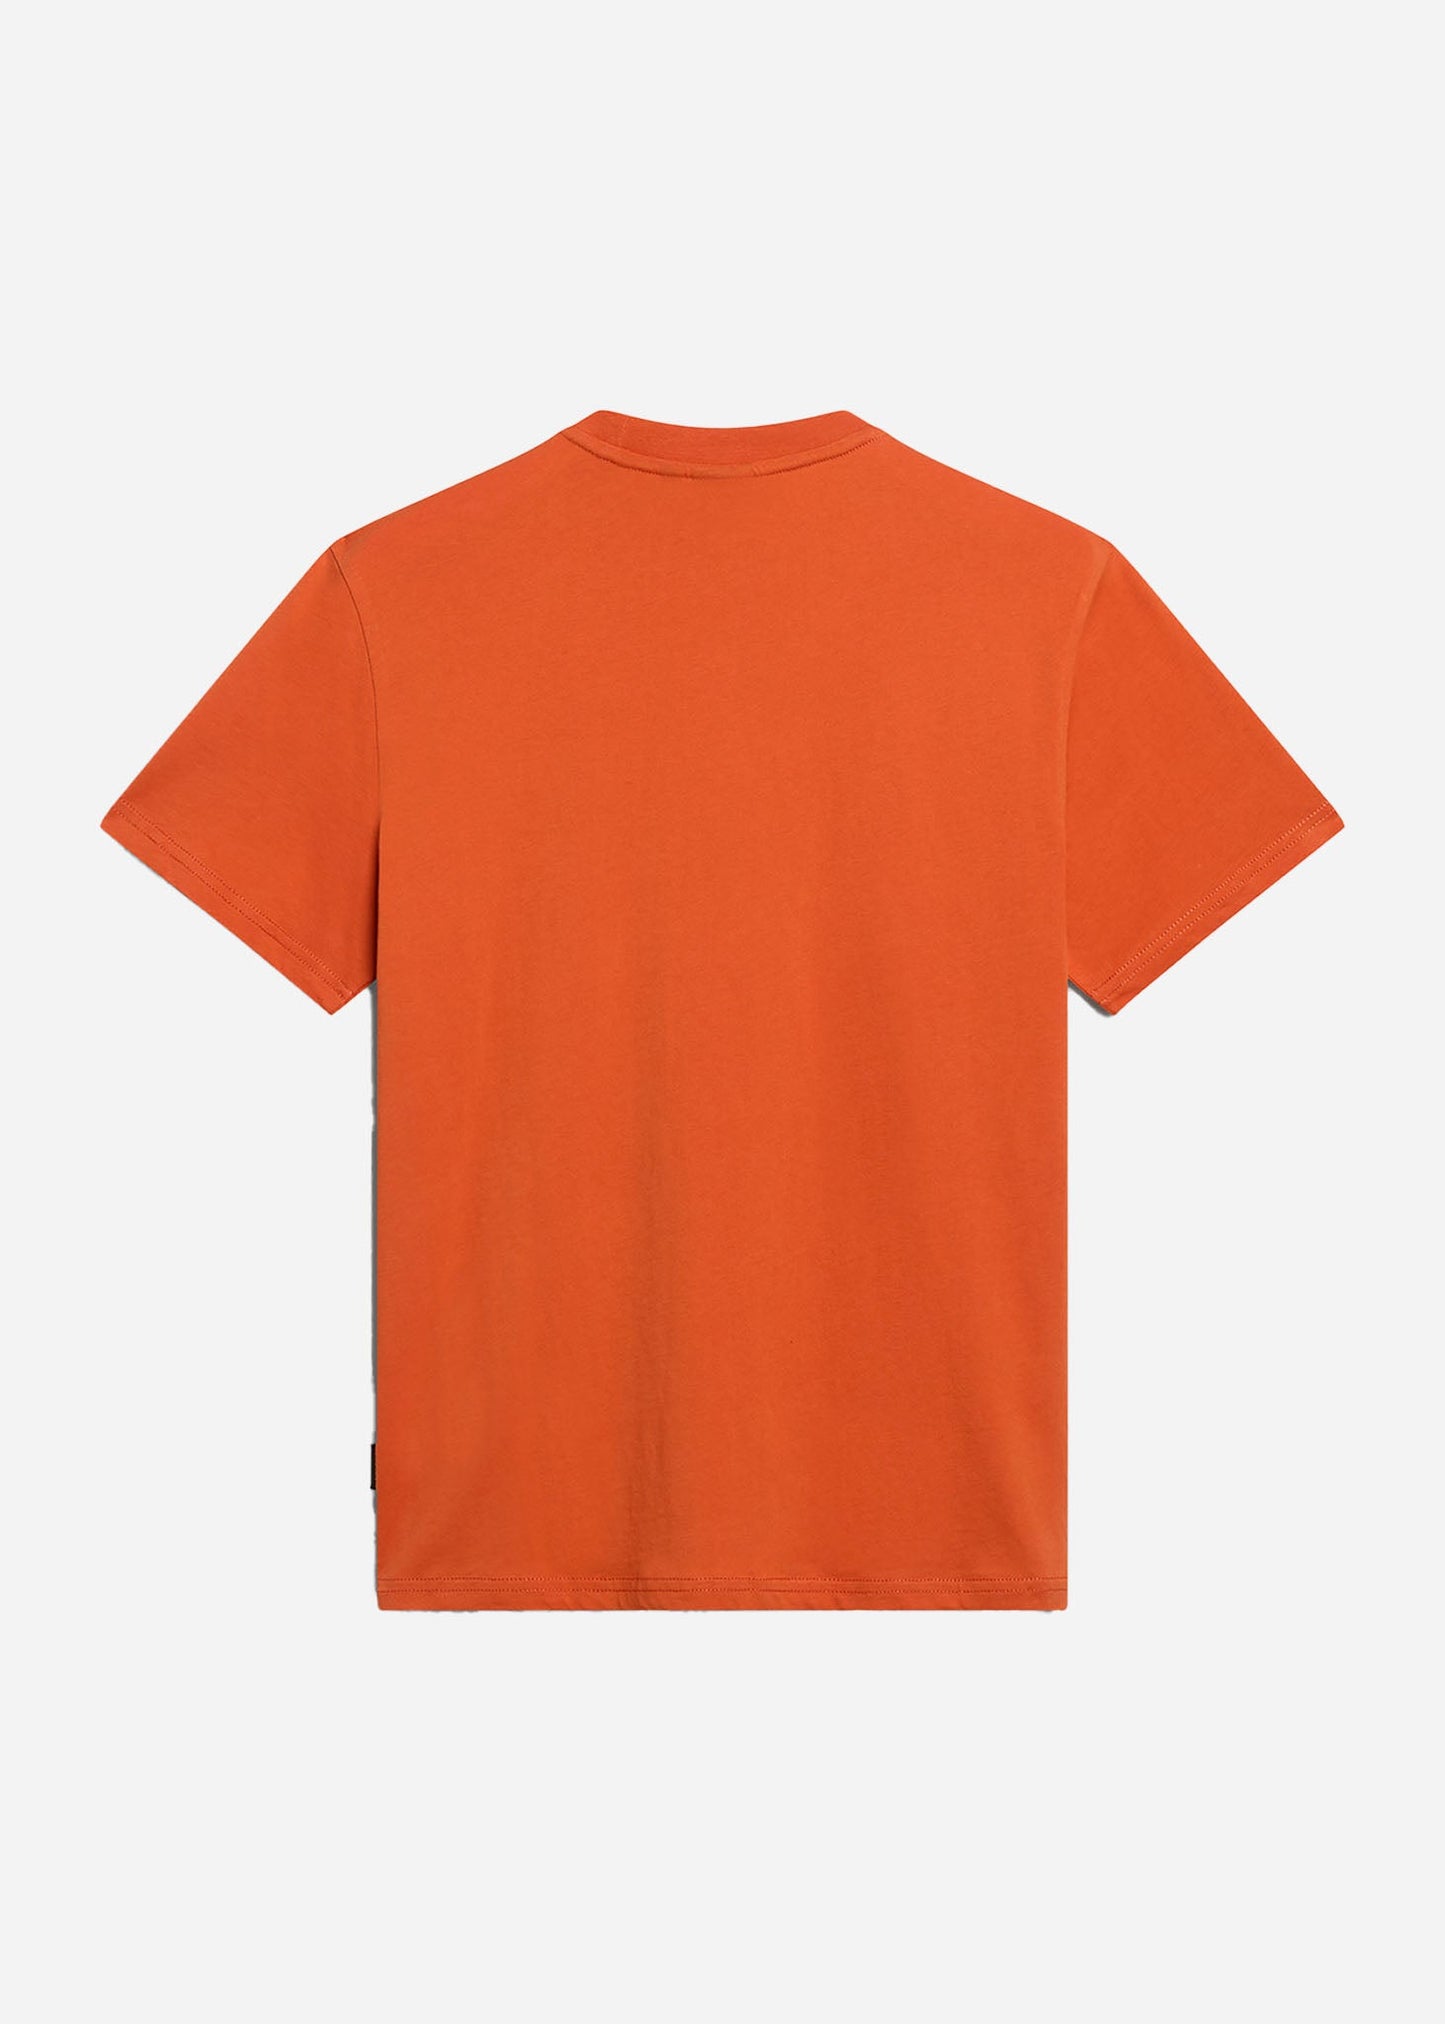 Napapijri T-shirts  Aylmer t-shirt - orange burnt 